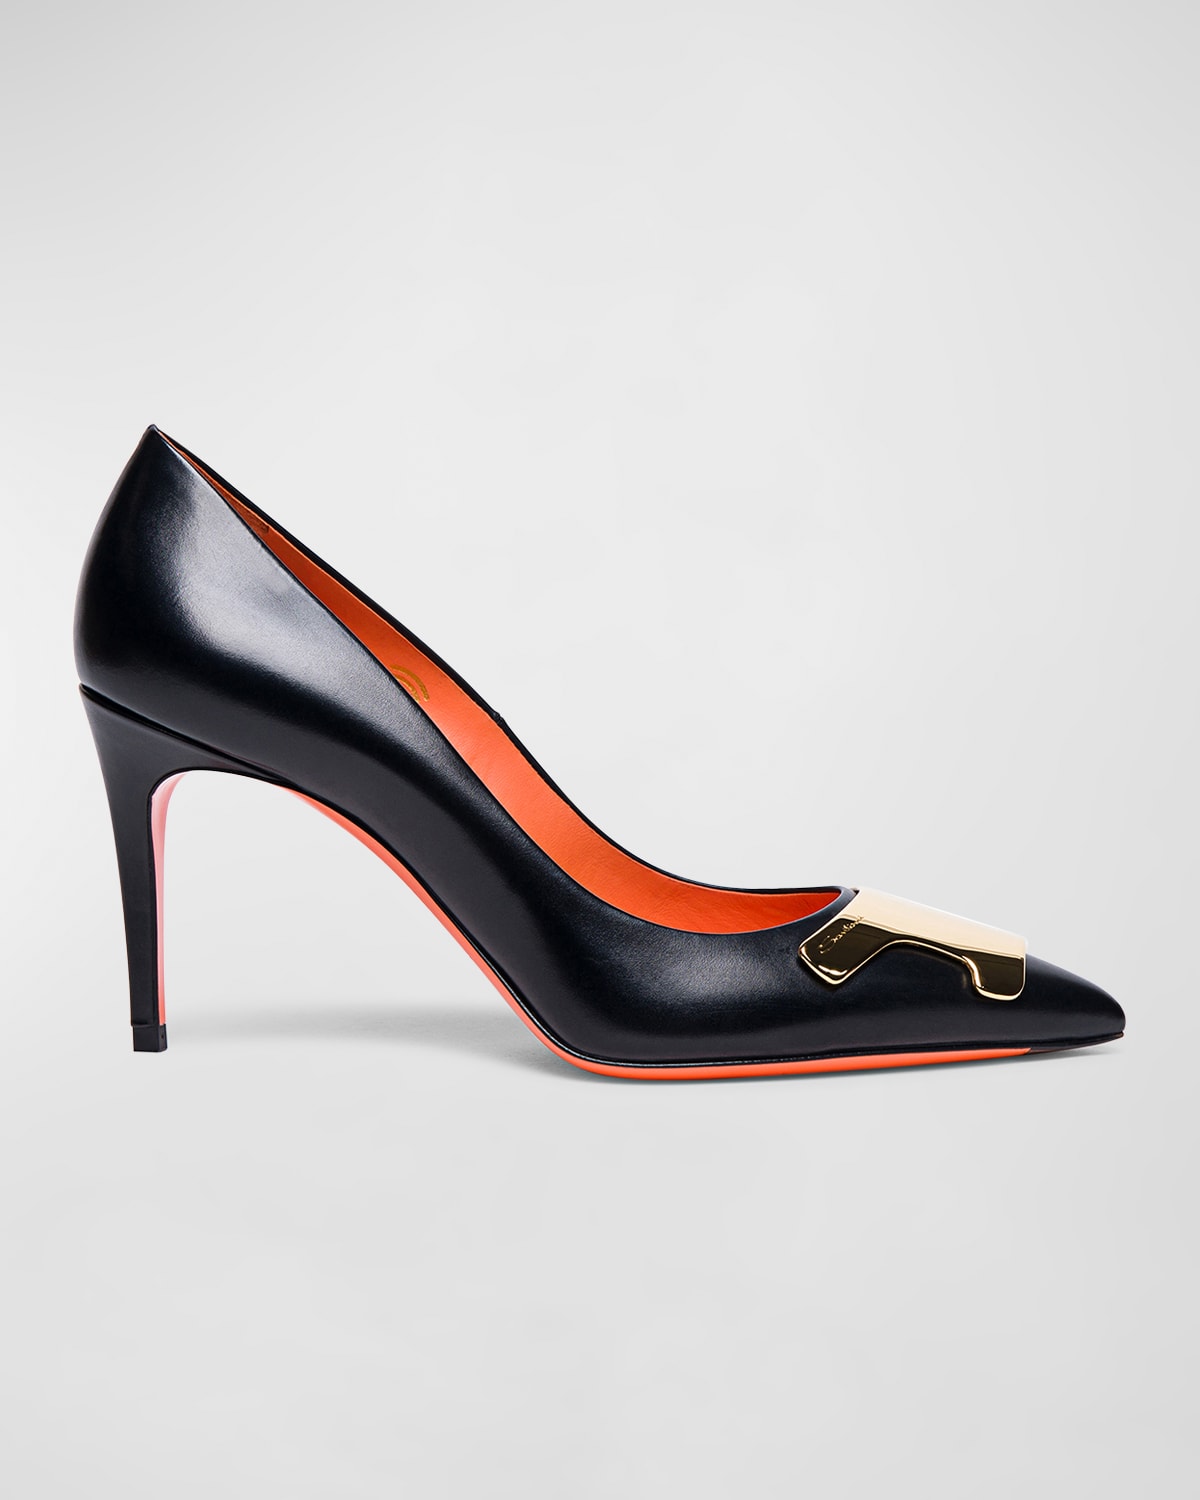 SANTONI Shoes for Women | ModeSens